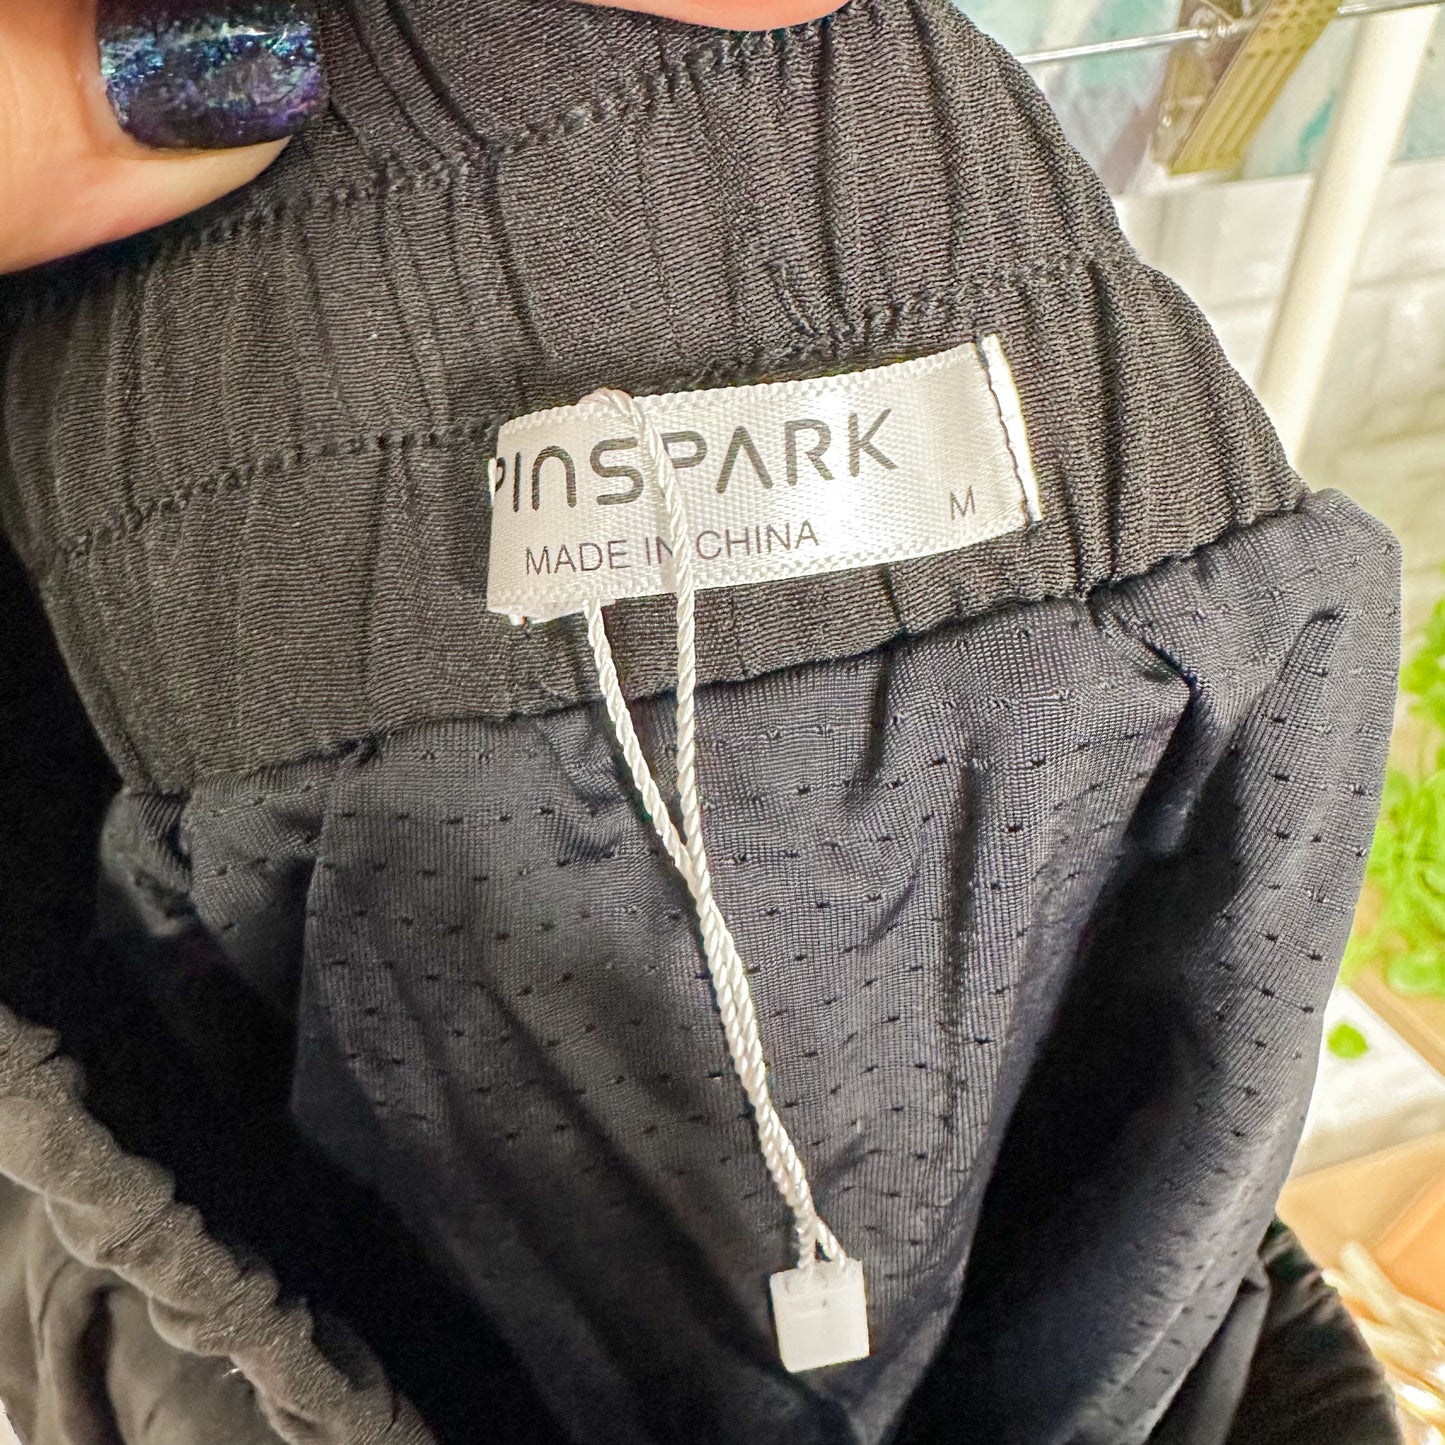 Pinspark New Black High Rise Shorts (M)